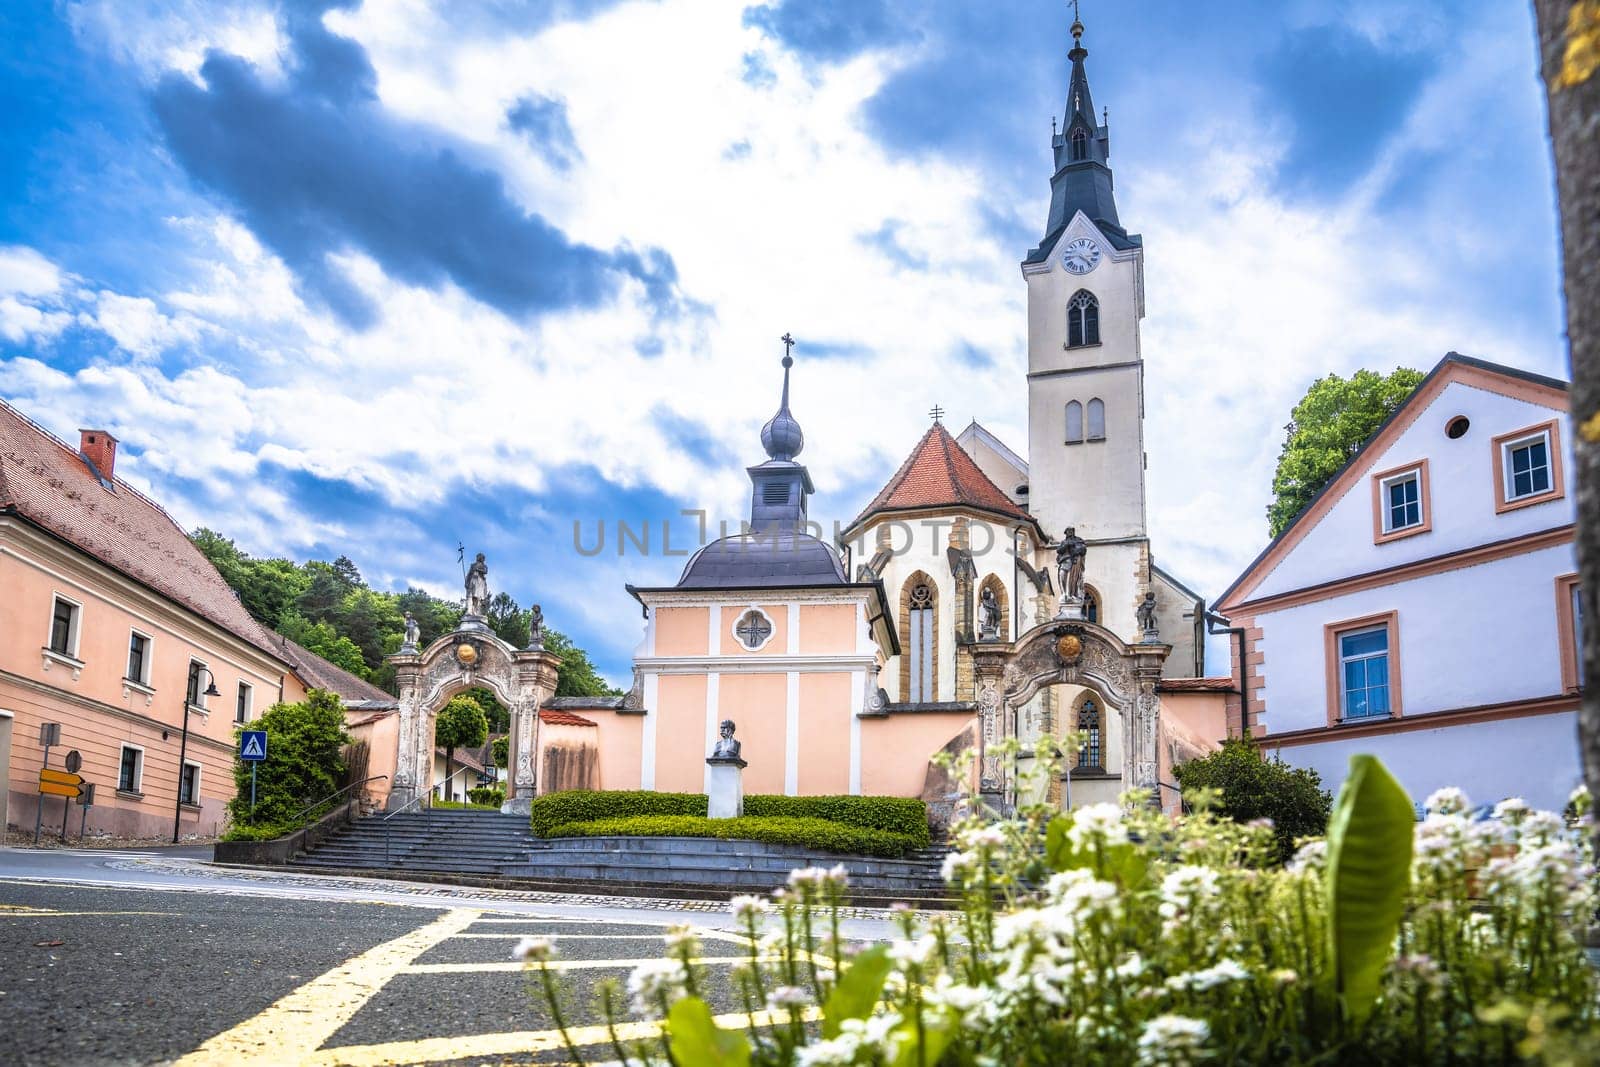 Town of Ljutomer church view by xbrchx